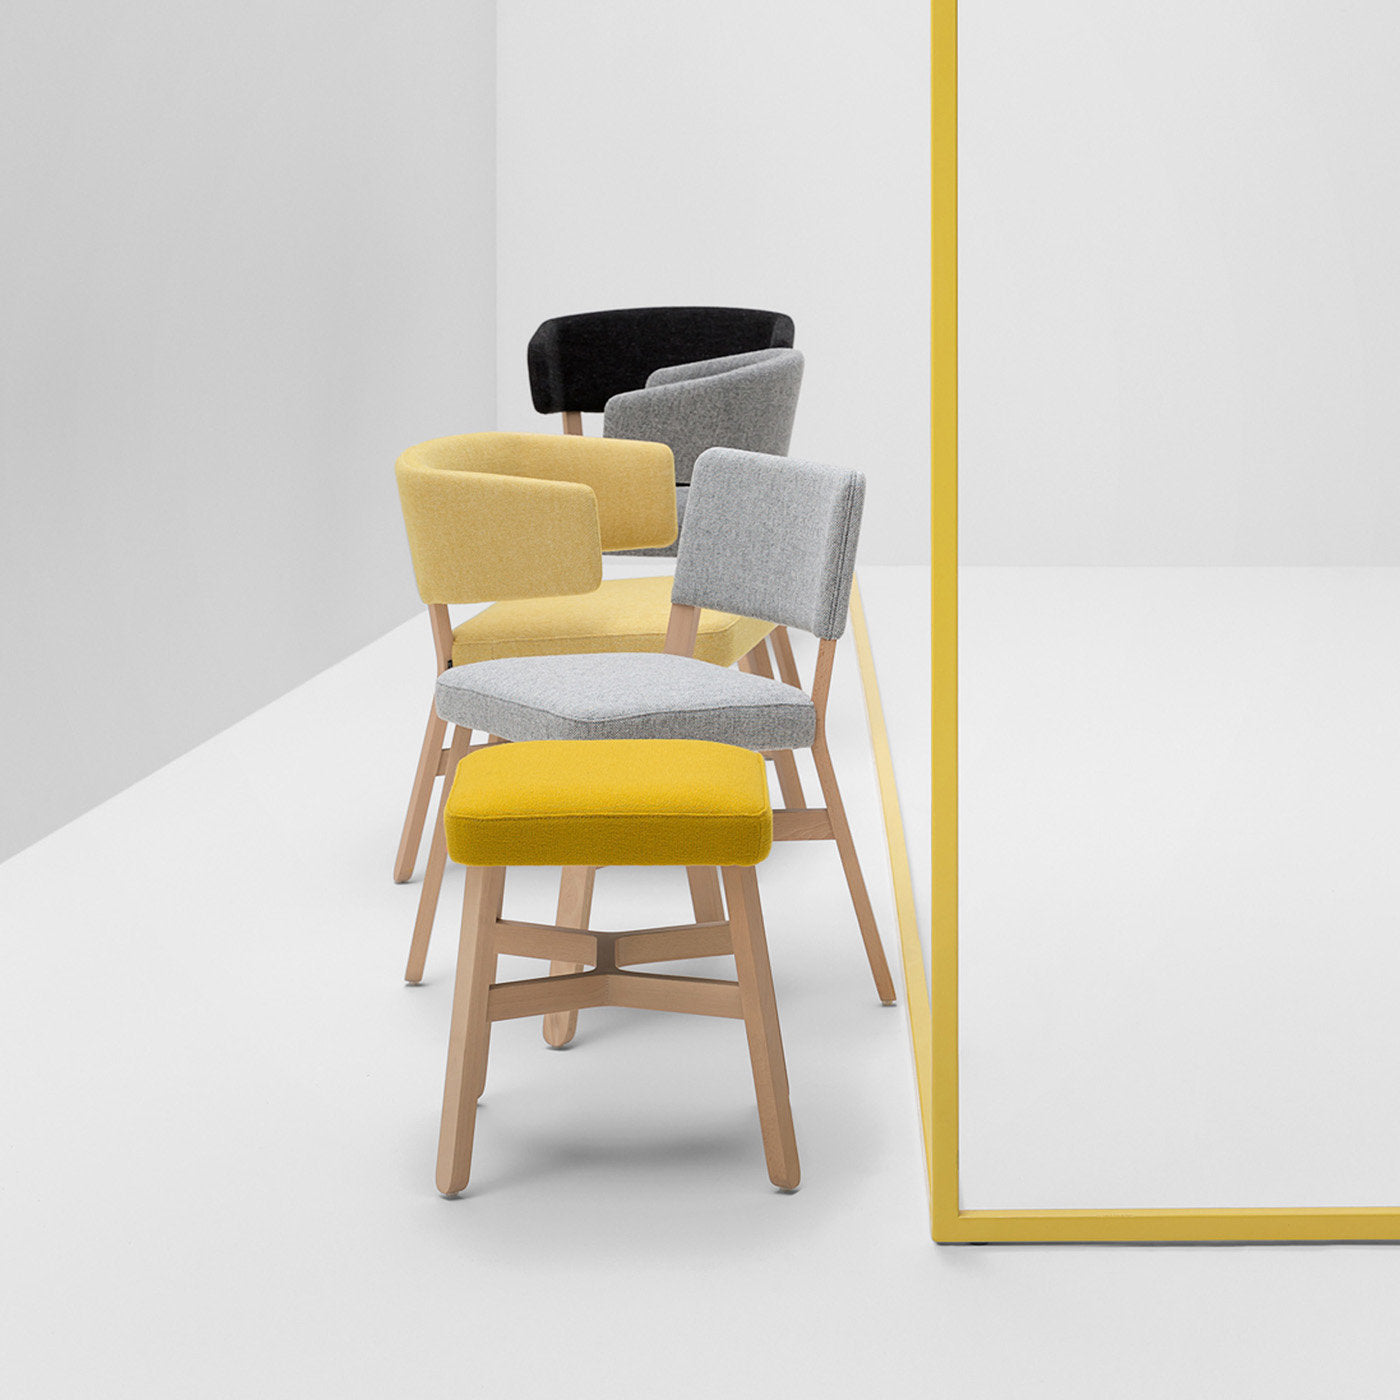 Croissant Lounge Chair by Emilio Nanni #3 - Alternative view 2